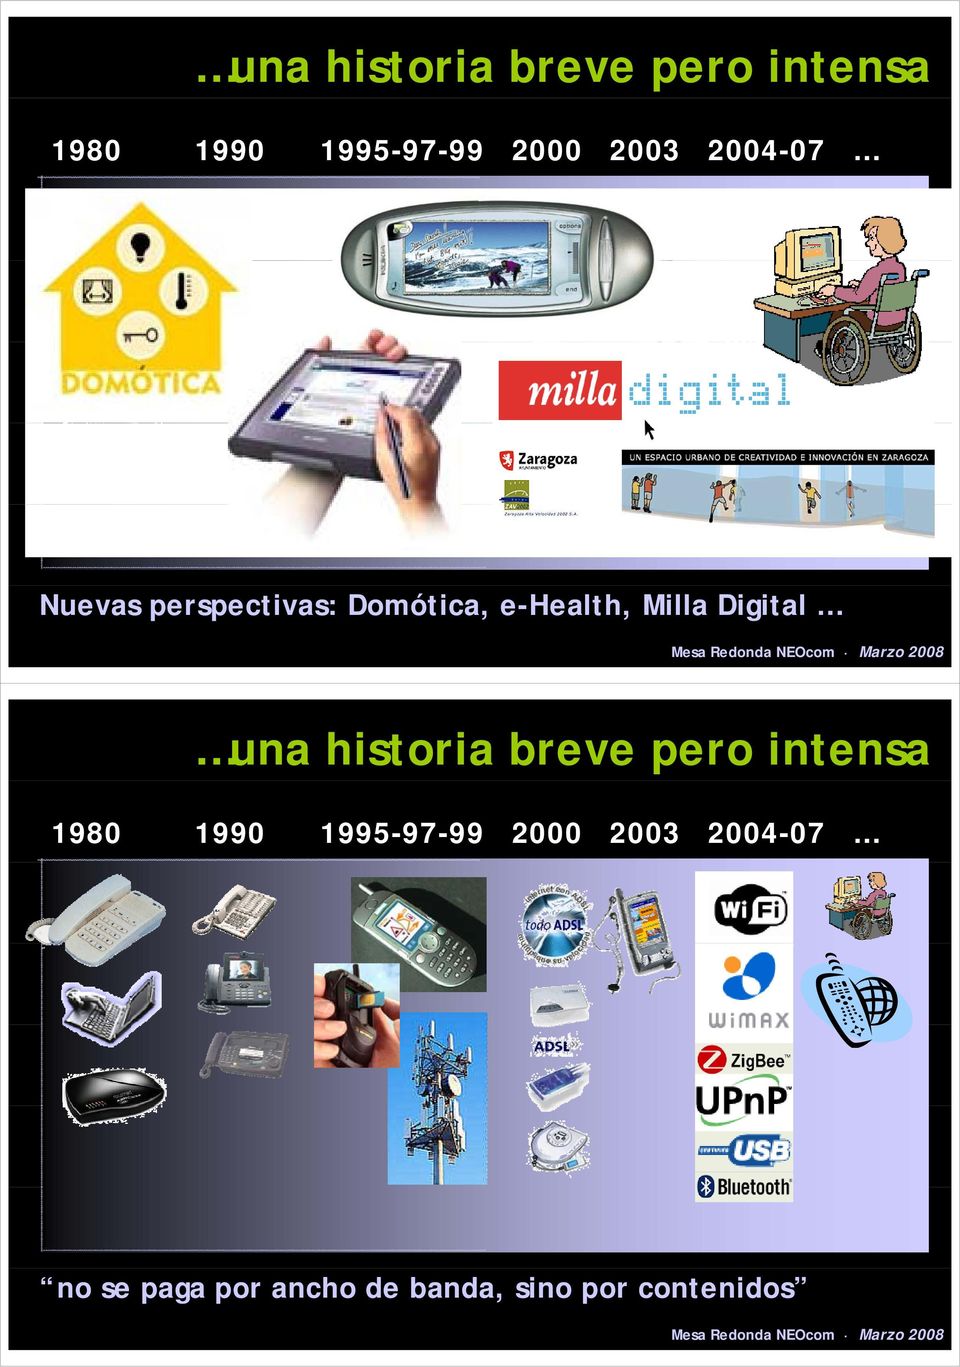 Digital  2003 2004-07 no se paga por ancho de banda, sino por